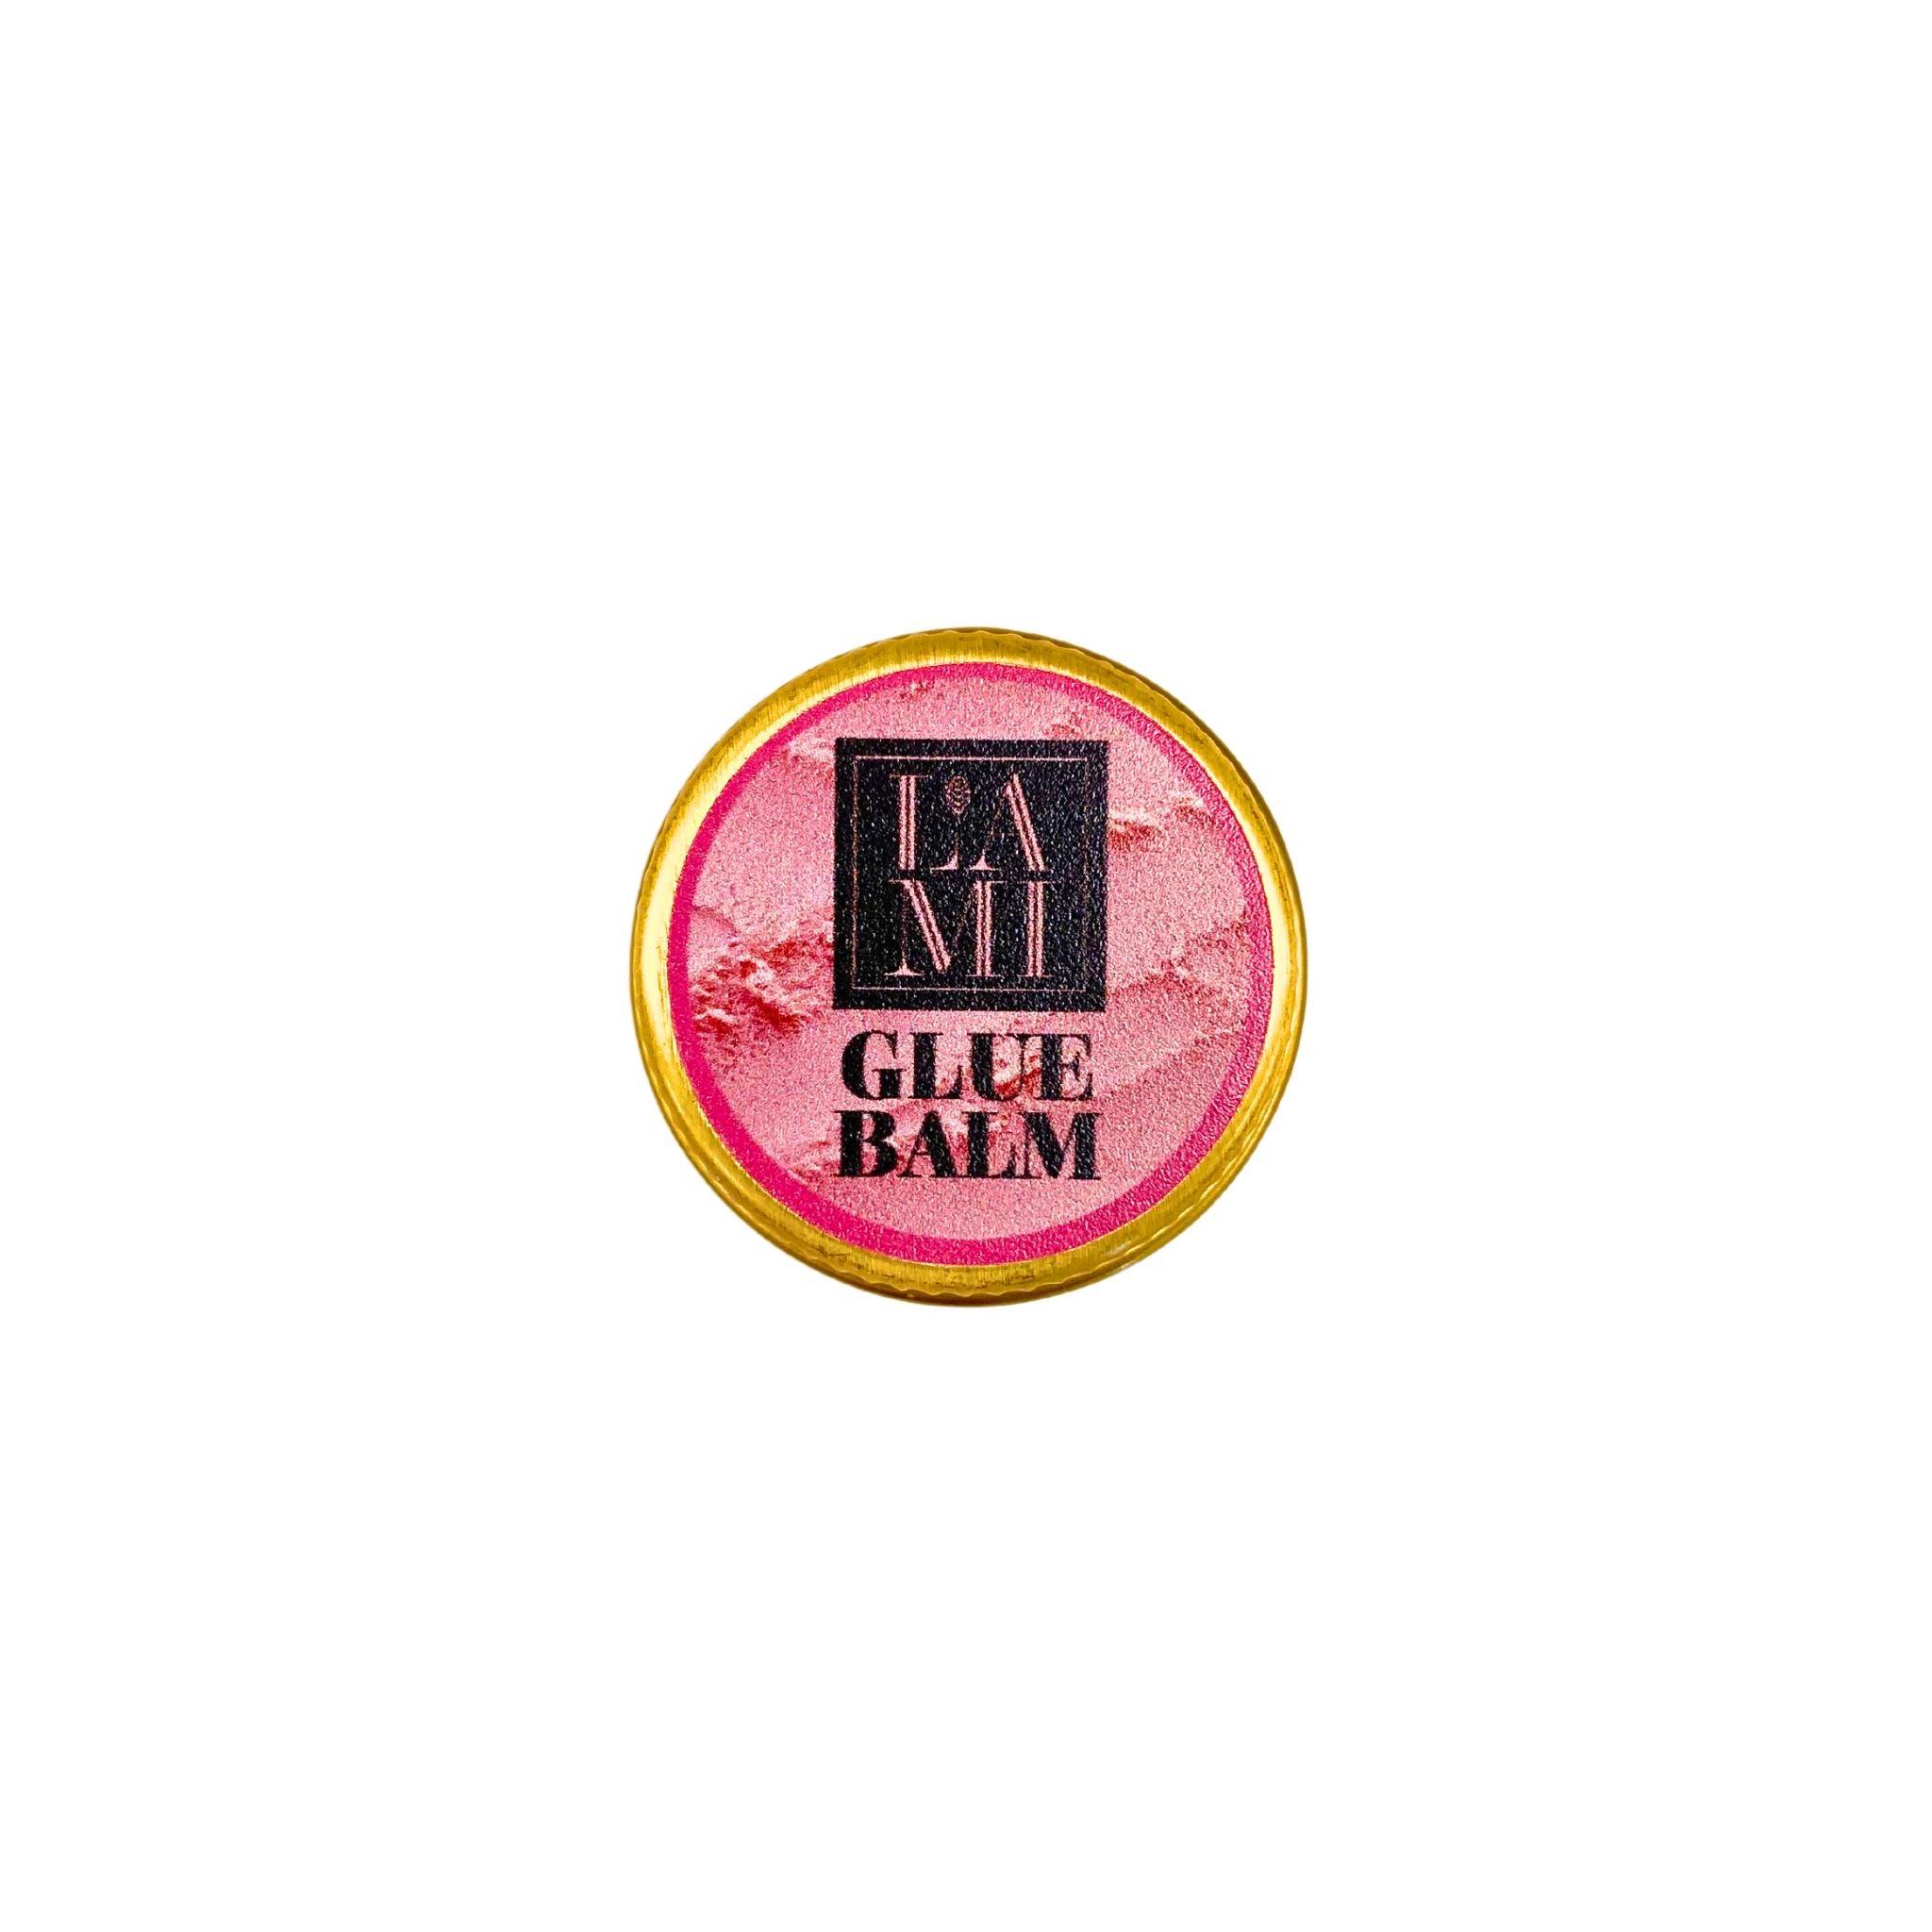 Lami Lashes Glue Balm Powerful 5ml Sample - The Beauty House Shop